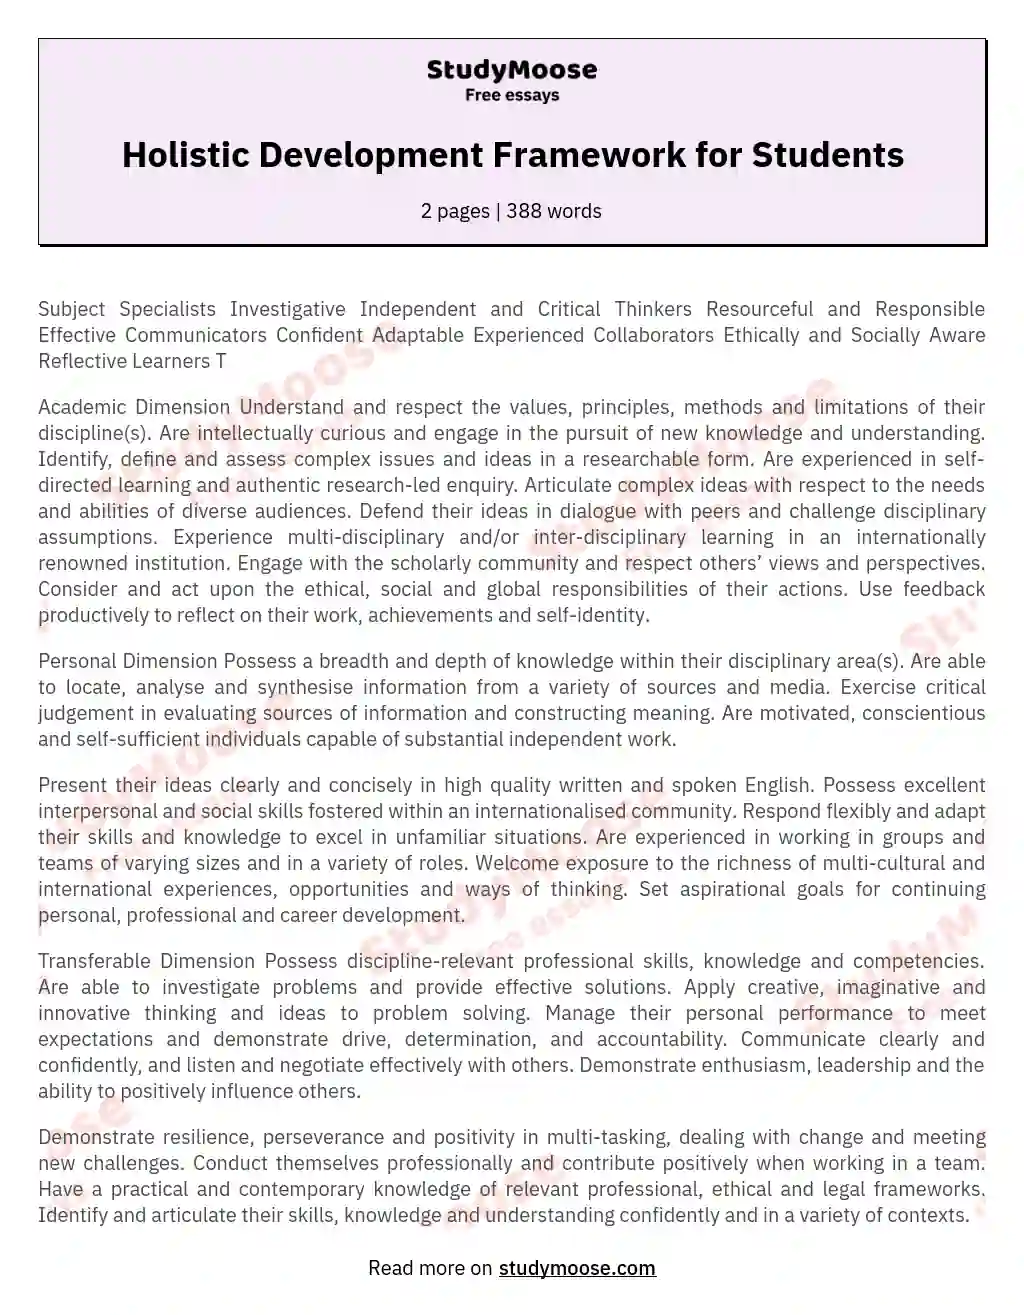 Holistic Development Framework for Students essay